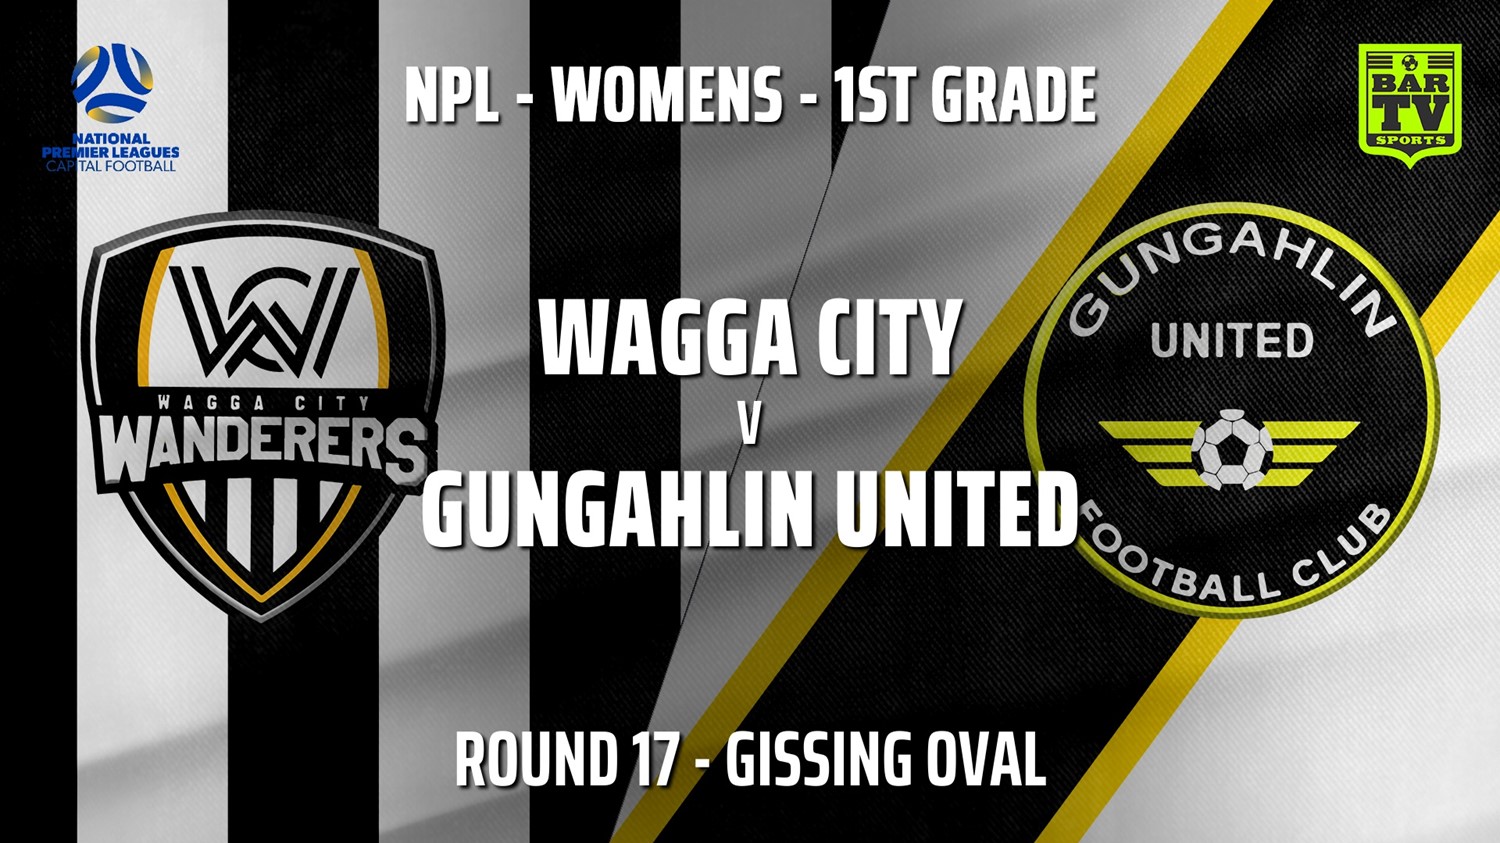 210808-Capital Womens Round 17 - Wagga City Wanderers FC (women) v Gungahlin United FC (women) Slate Image